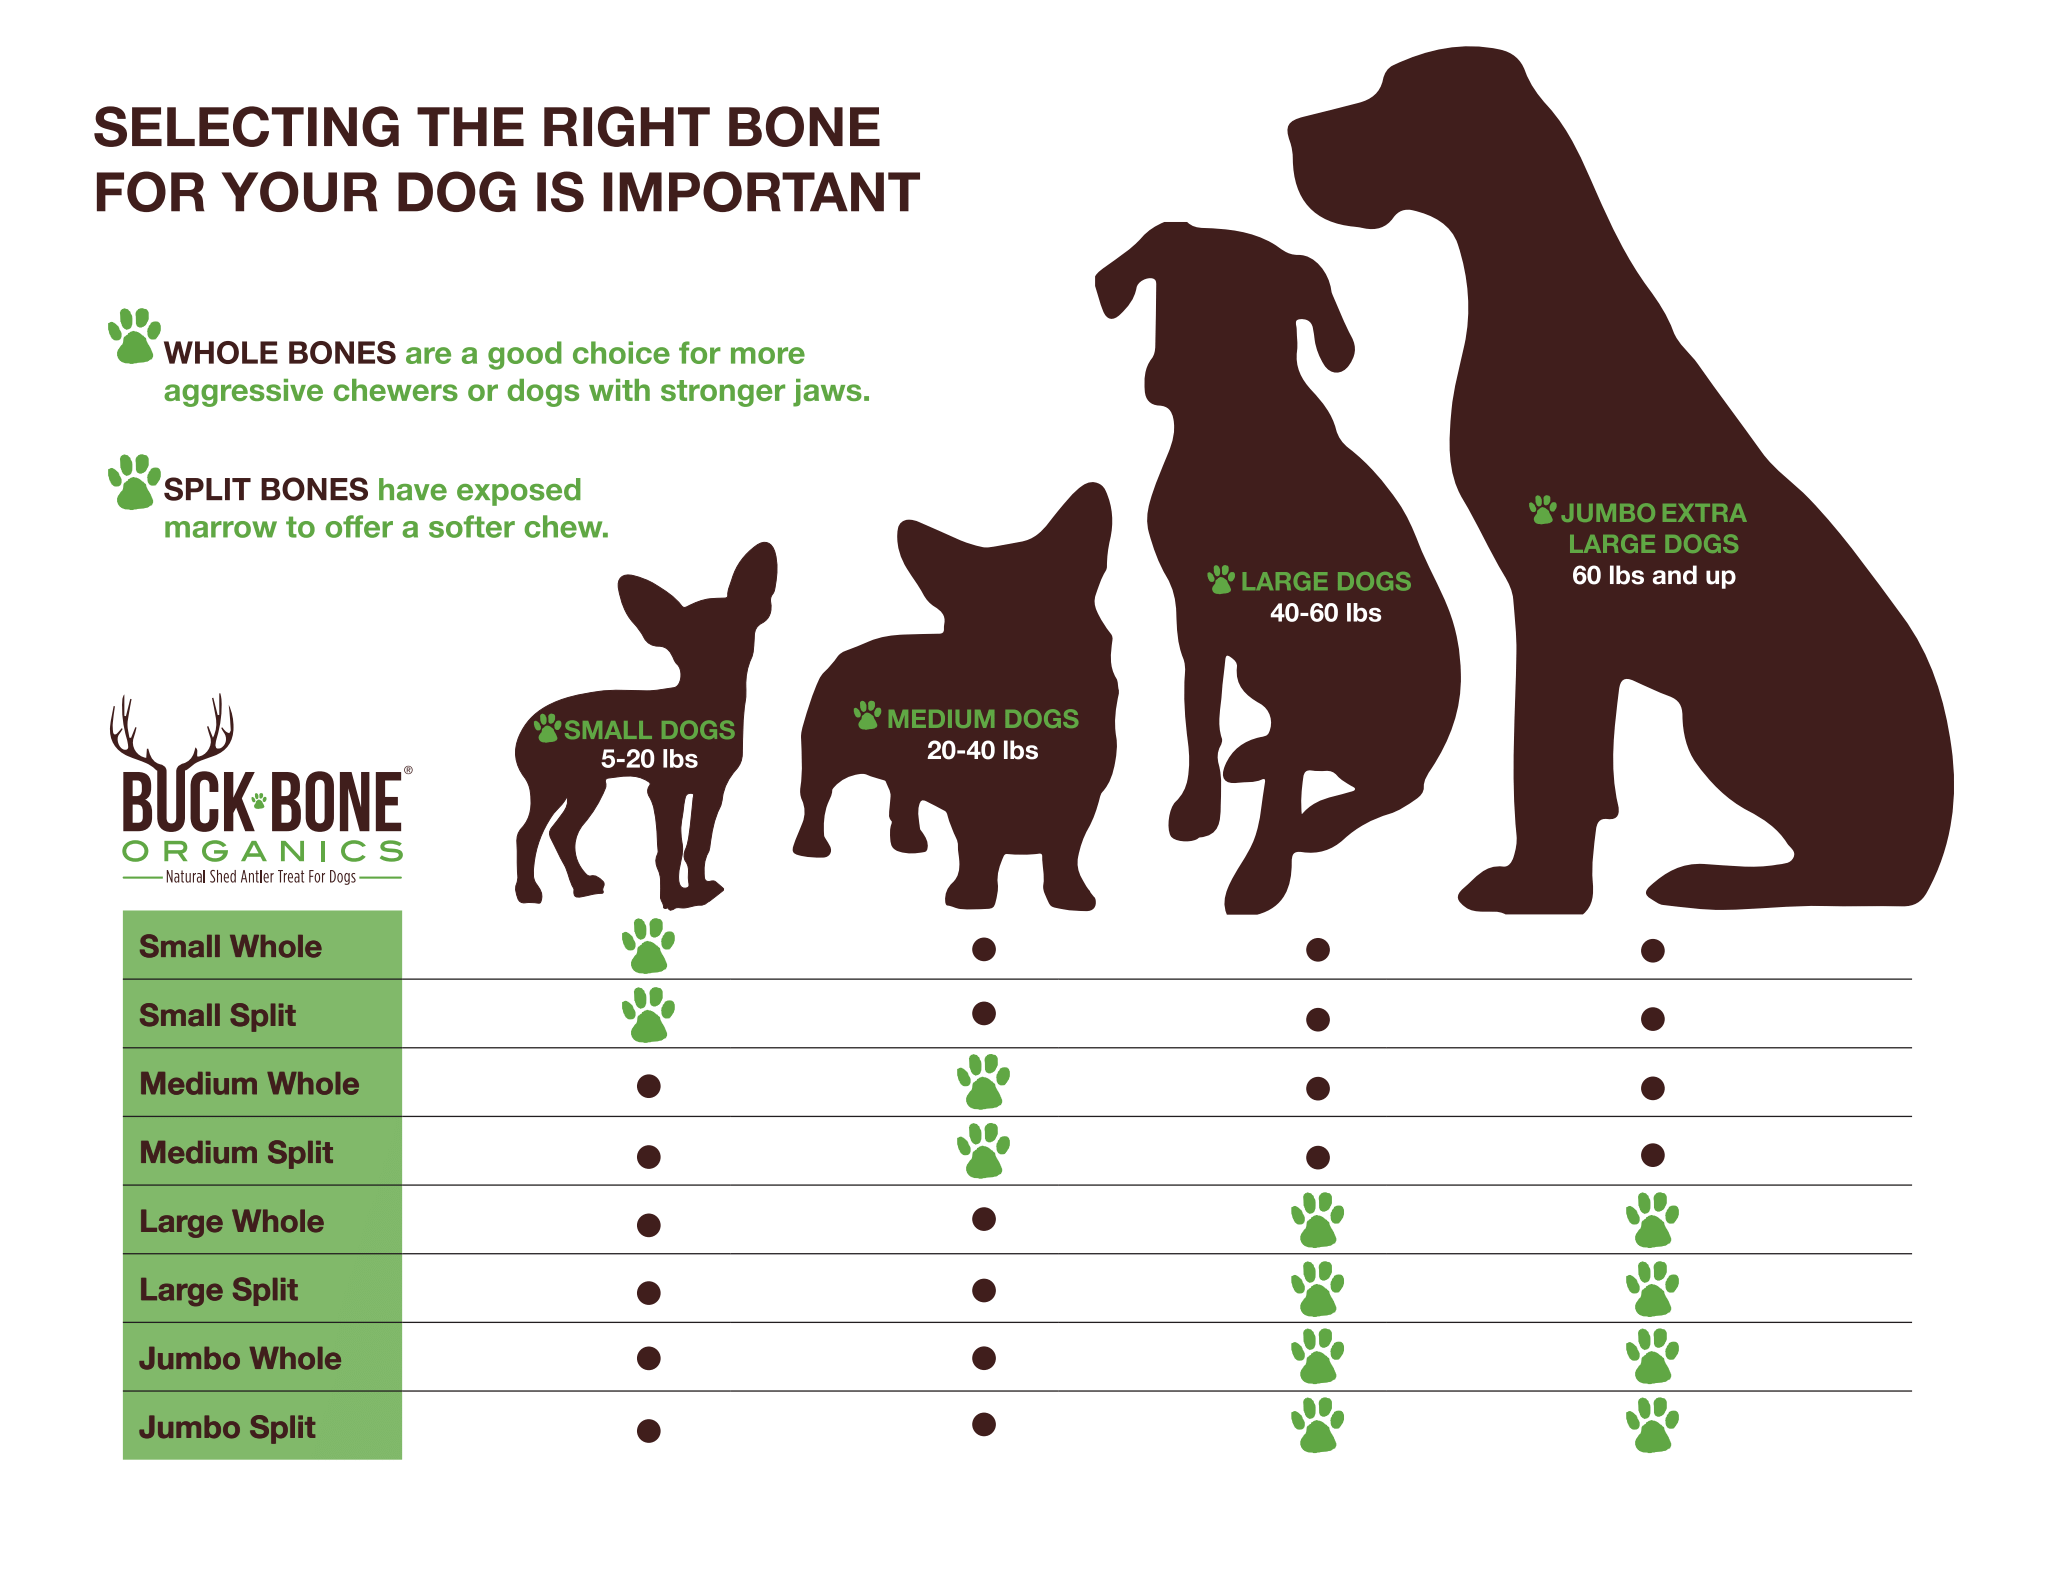 buckbone organics dog size chart for bones 